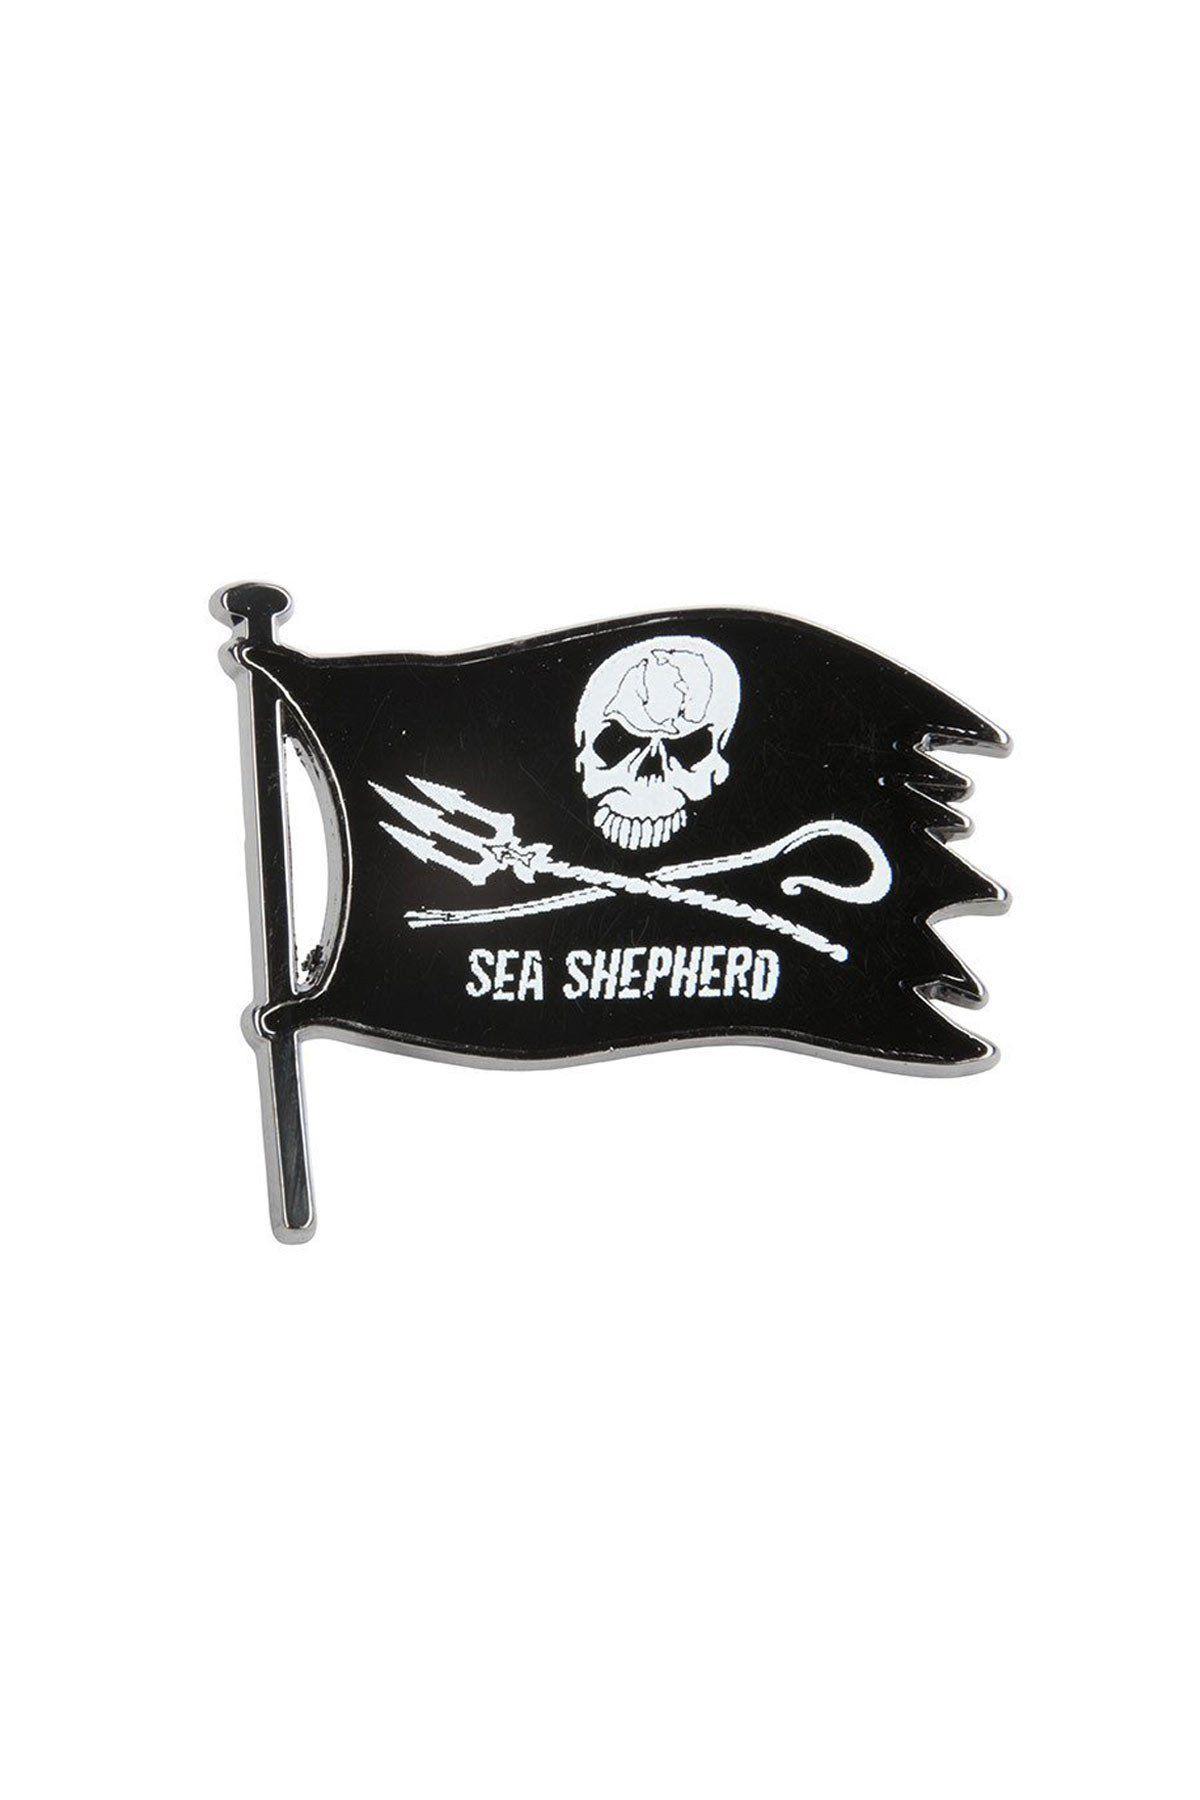 Trident Staf Logo - Jolly Roger Flag Pin | misc | Flag pins, Jolly roger, Flag